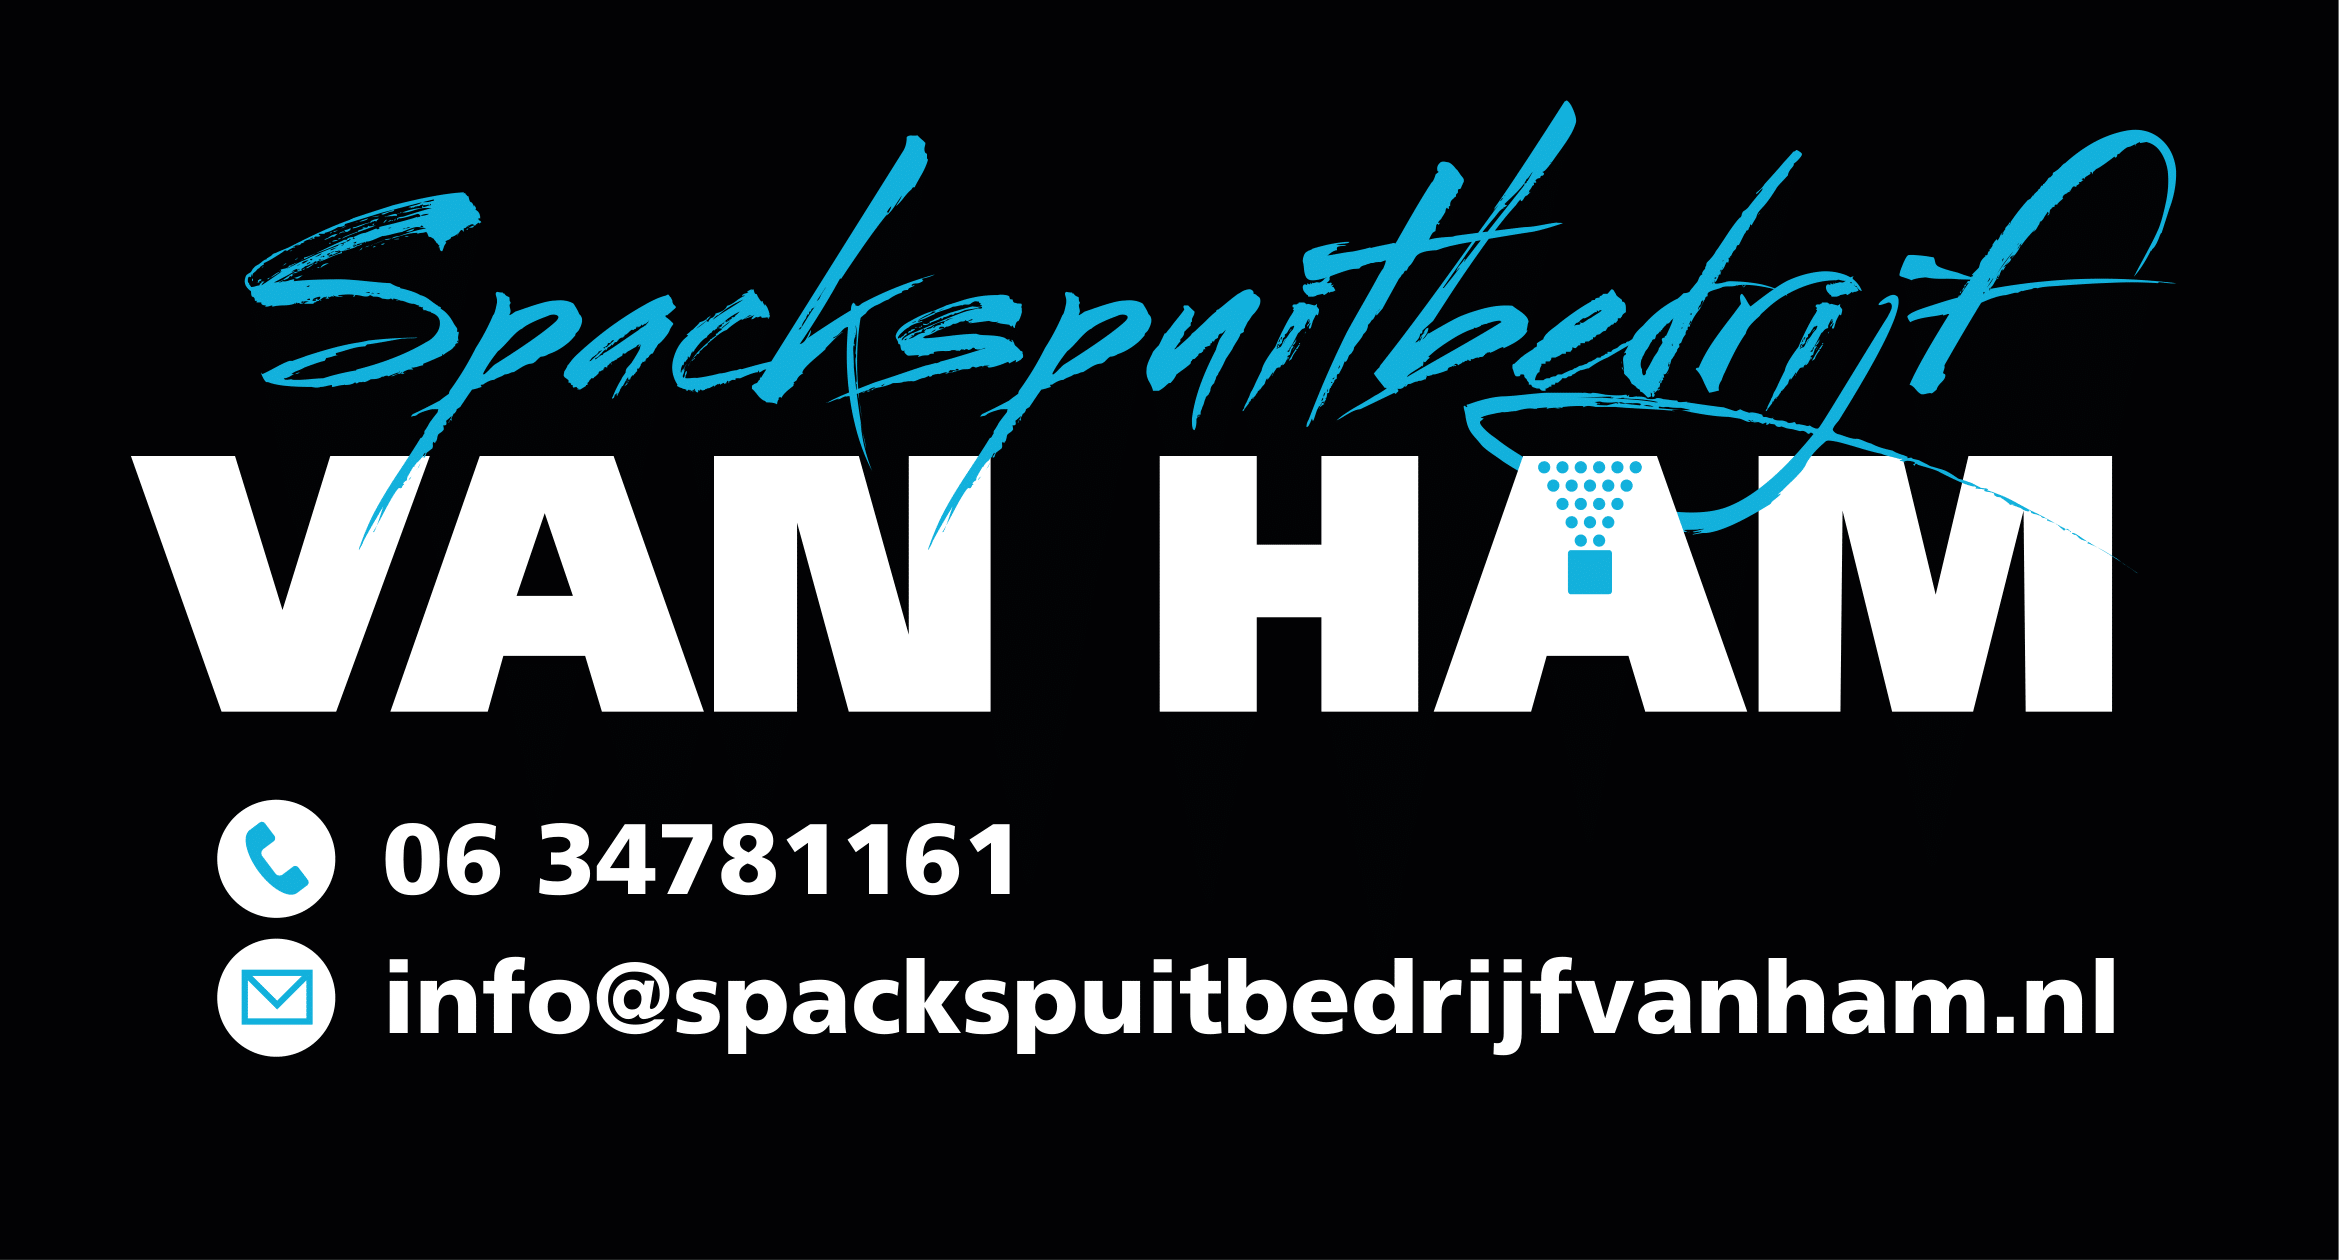 ham van spackspuitbedrijf logo voorstel met mail foon diapos 1